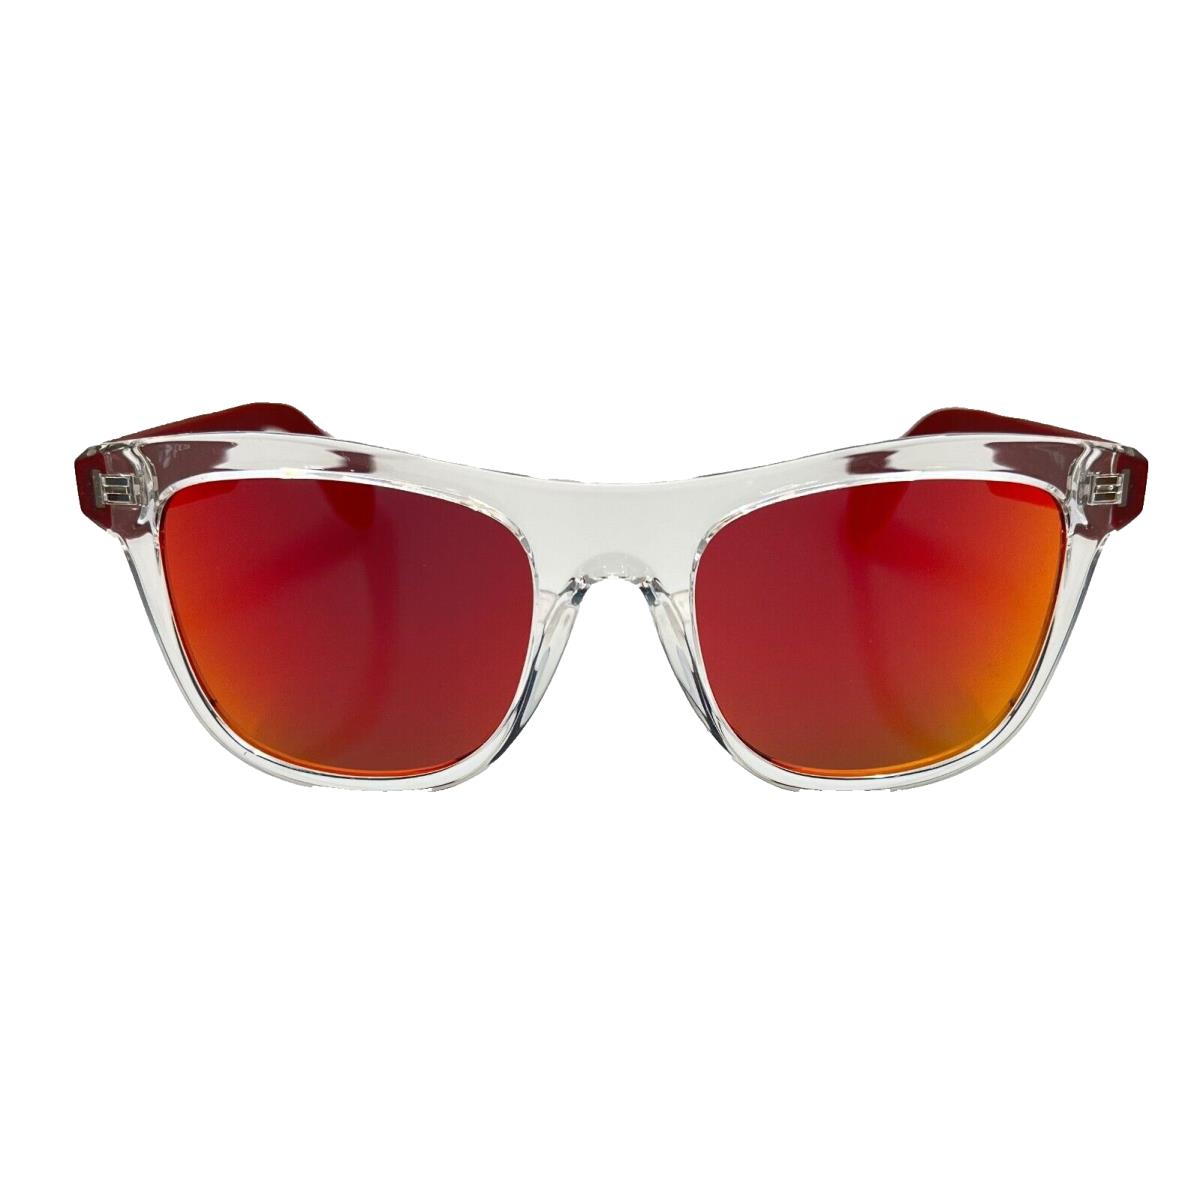 Adidas Originals - OR0057 26U 53/20/145 Crystal Sunglasses Case